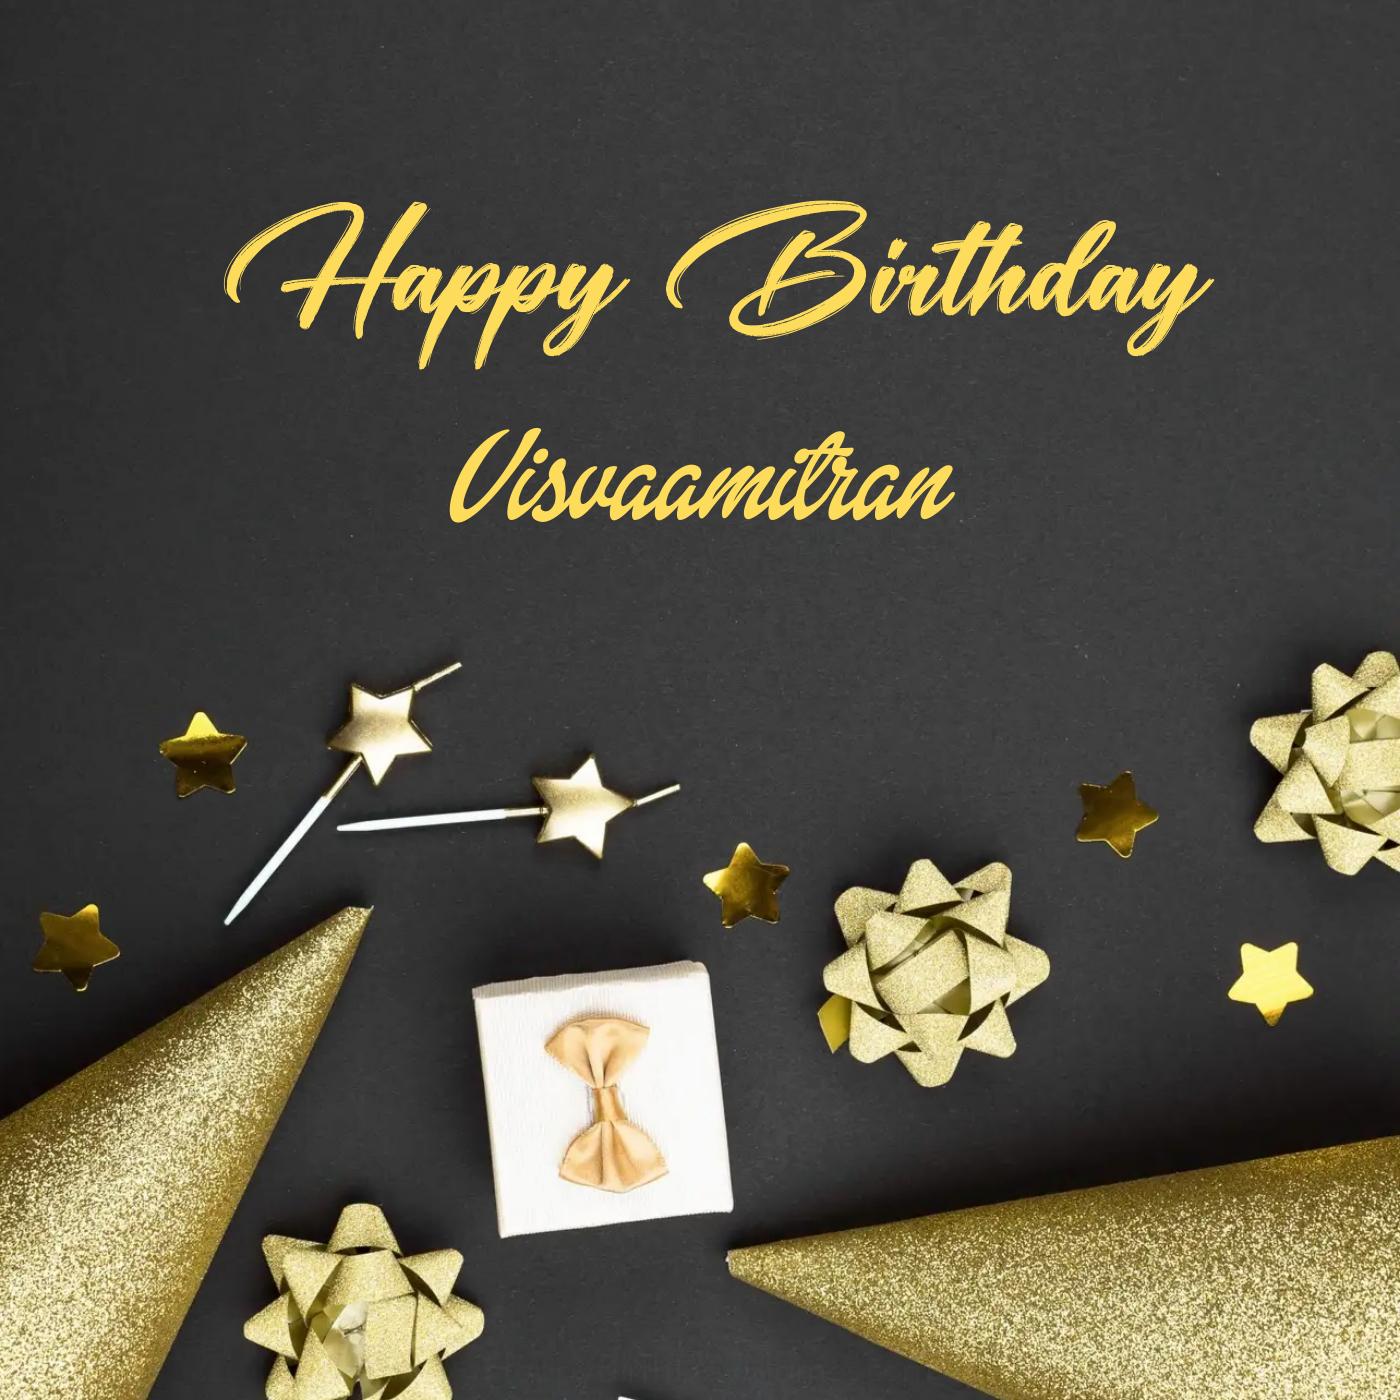 Happy Birthday Visvaamitran Golden Theme Card